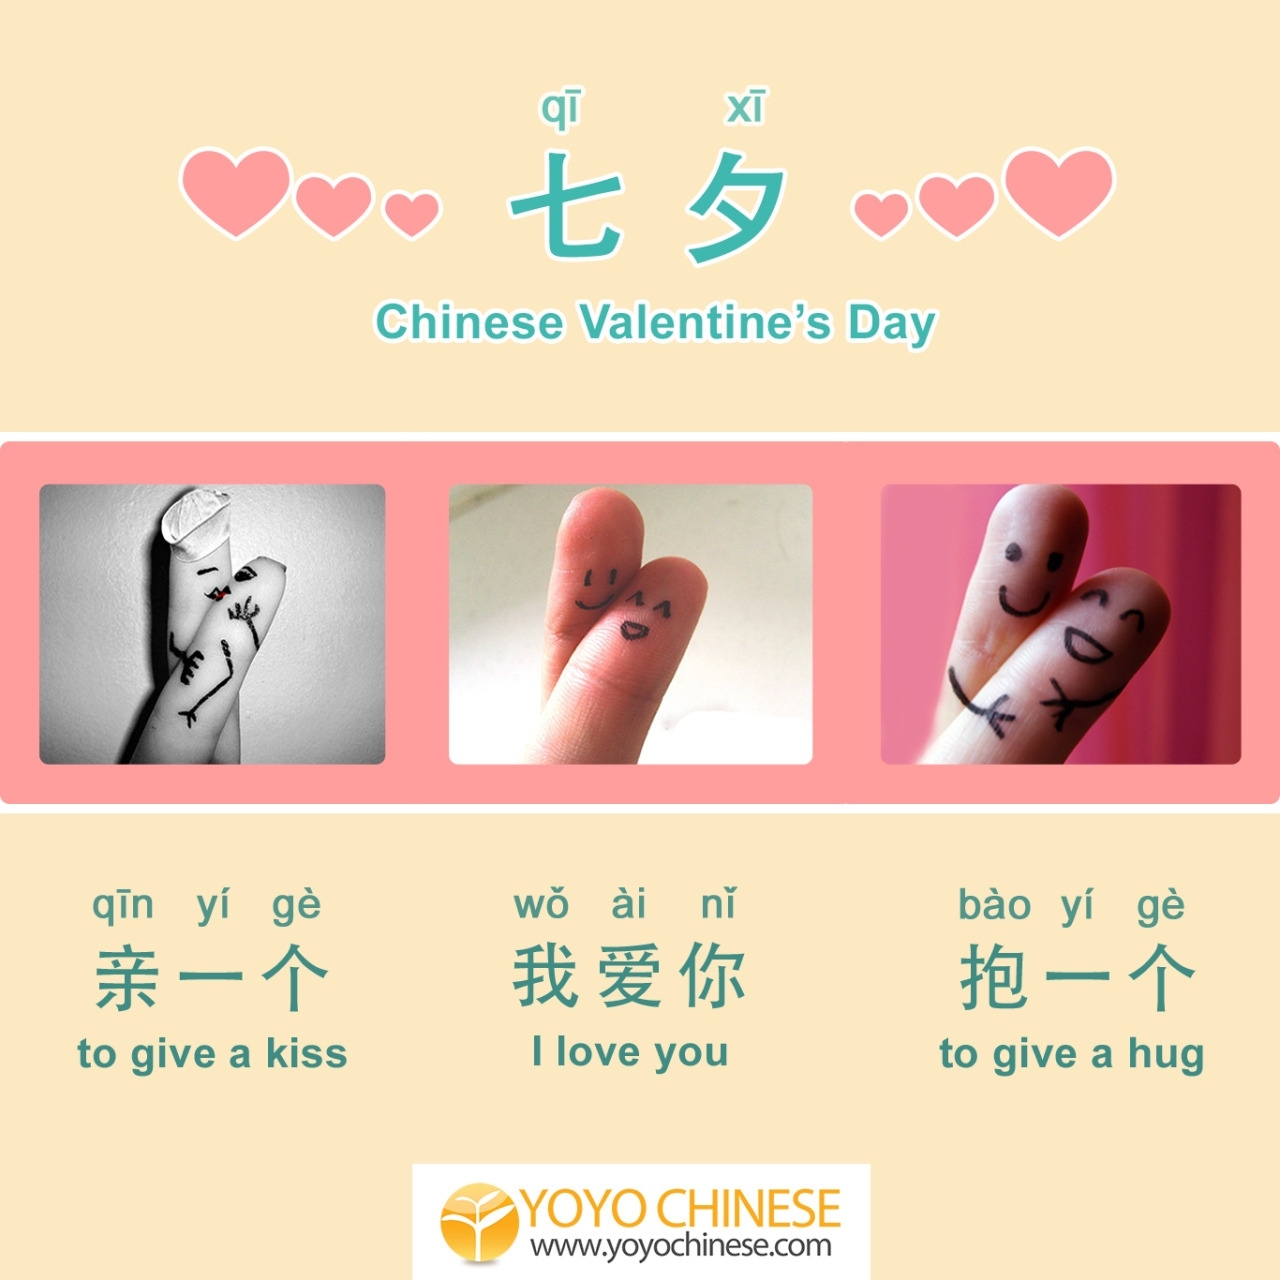 Yoyo Chinese — Happy Chinese Valentine&#039;s Day! 七夕节快乐 (Qī Xī Jié Chinese Calendar 7Th Month 7Th Day